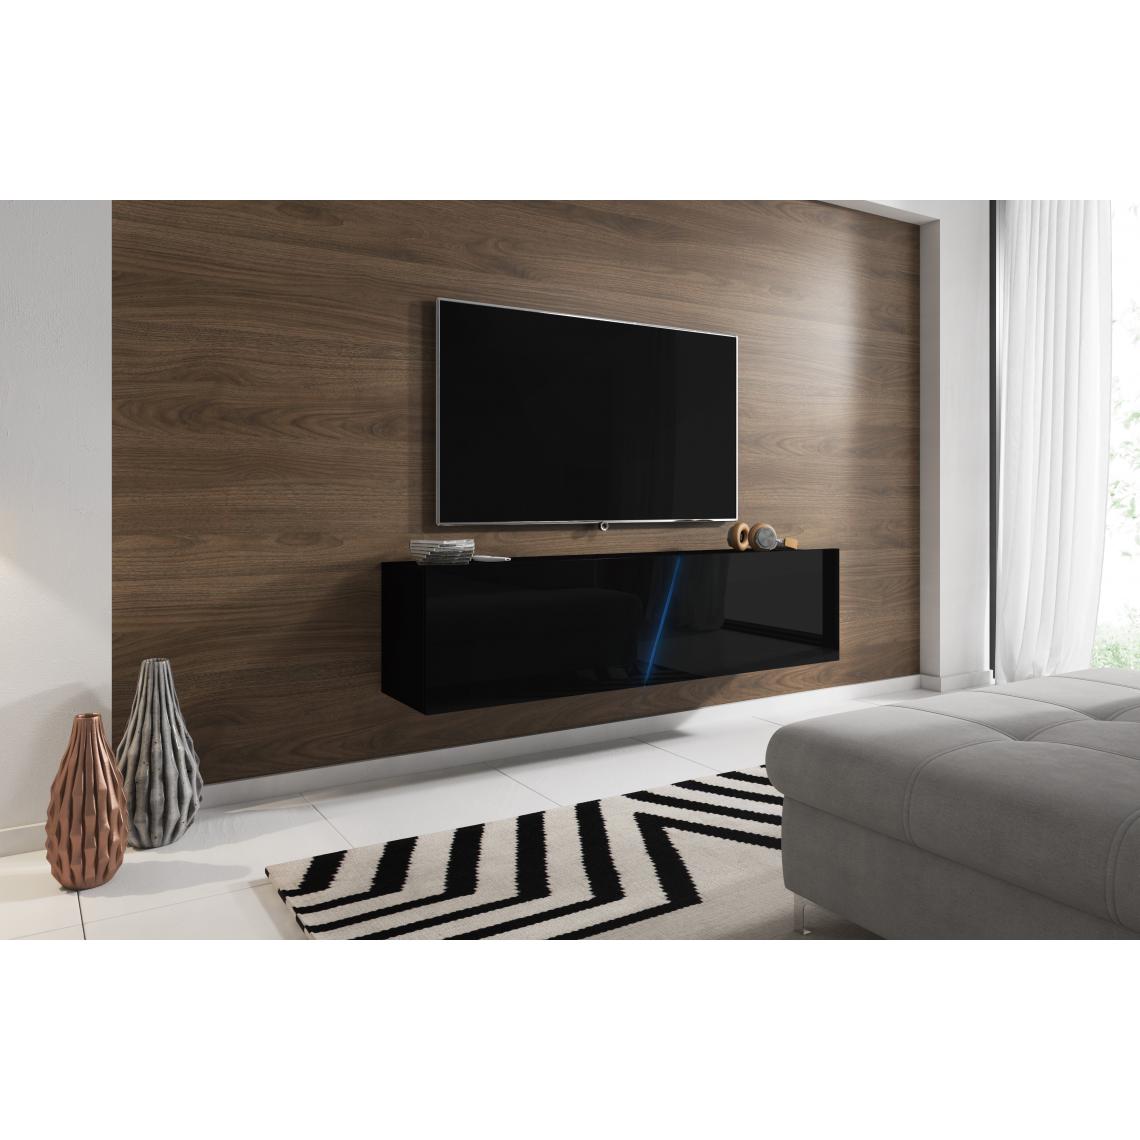 3xeliving - Meuble TV suspendu moderne et tendance Aczi blanc / gris brillant 160cm LED - Meubles TV, Hi-Fi